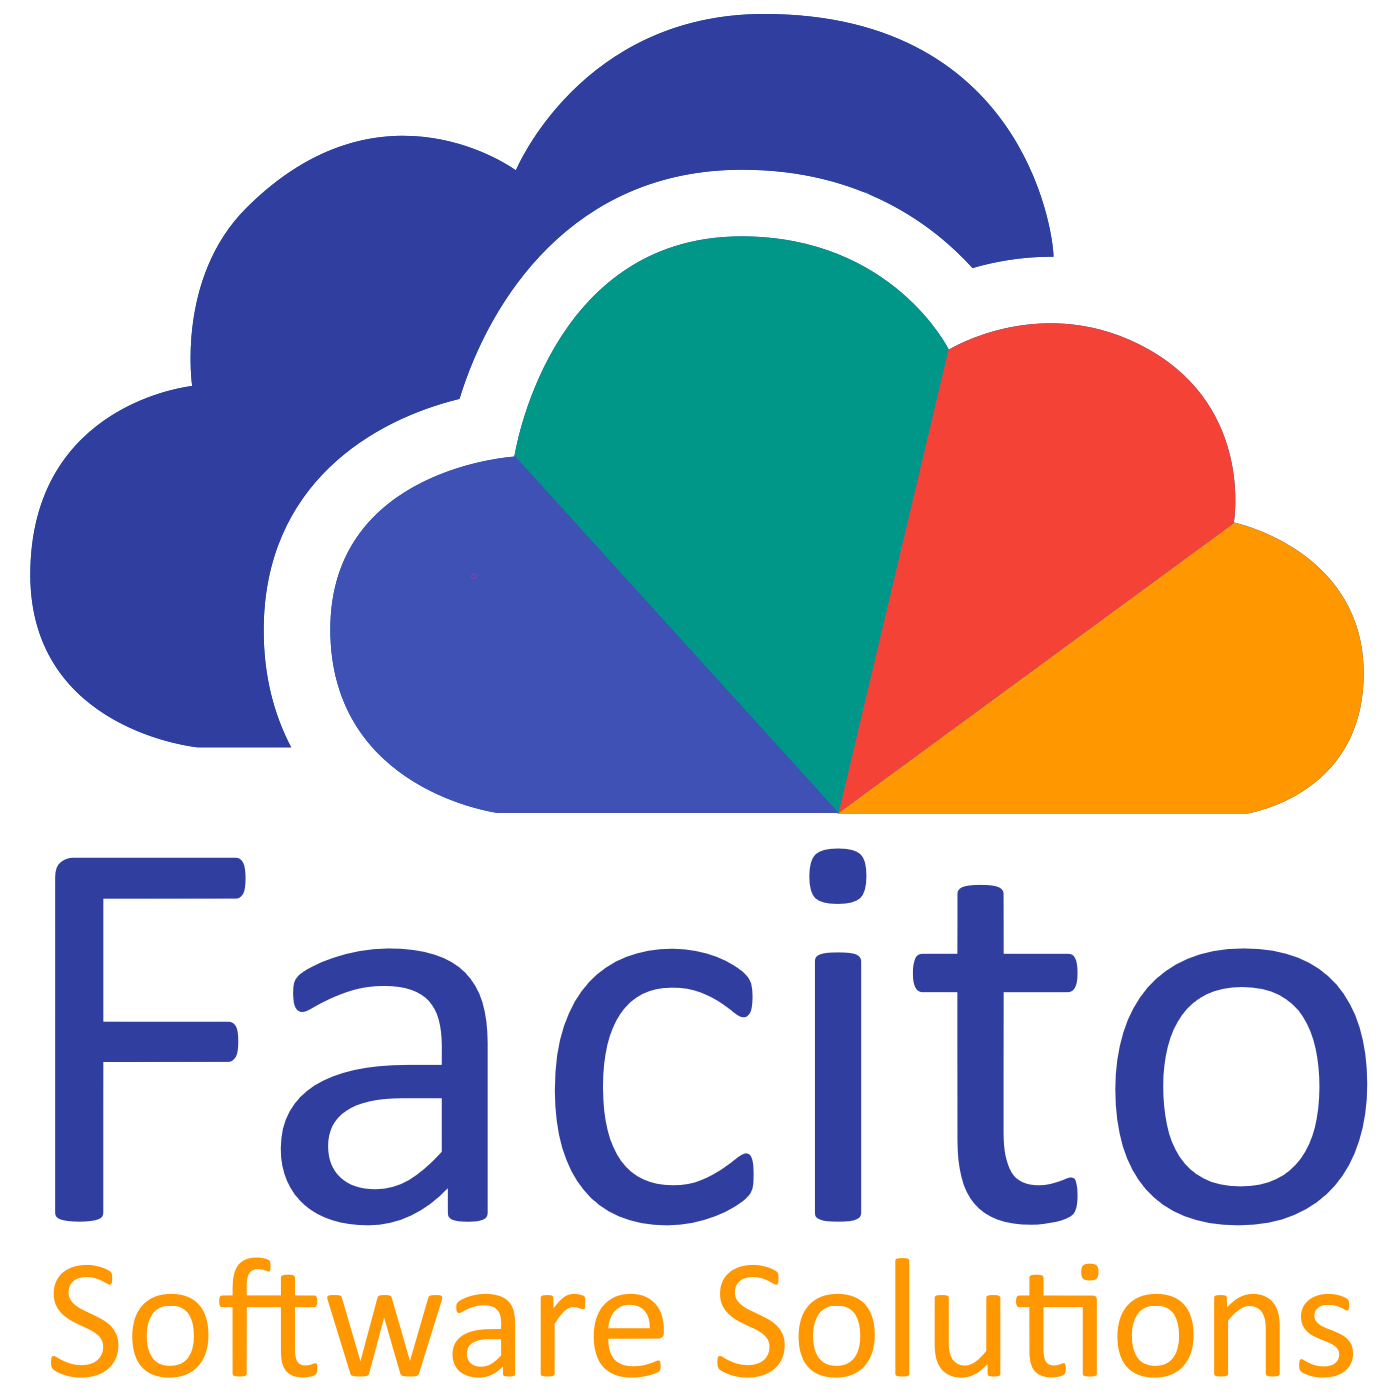 Facito Software Solutions